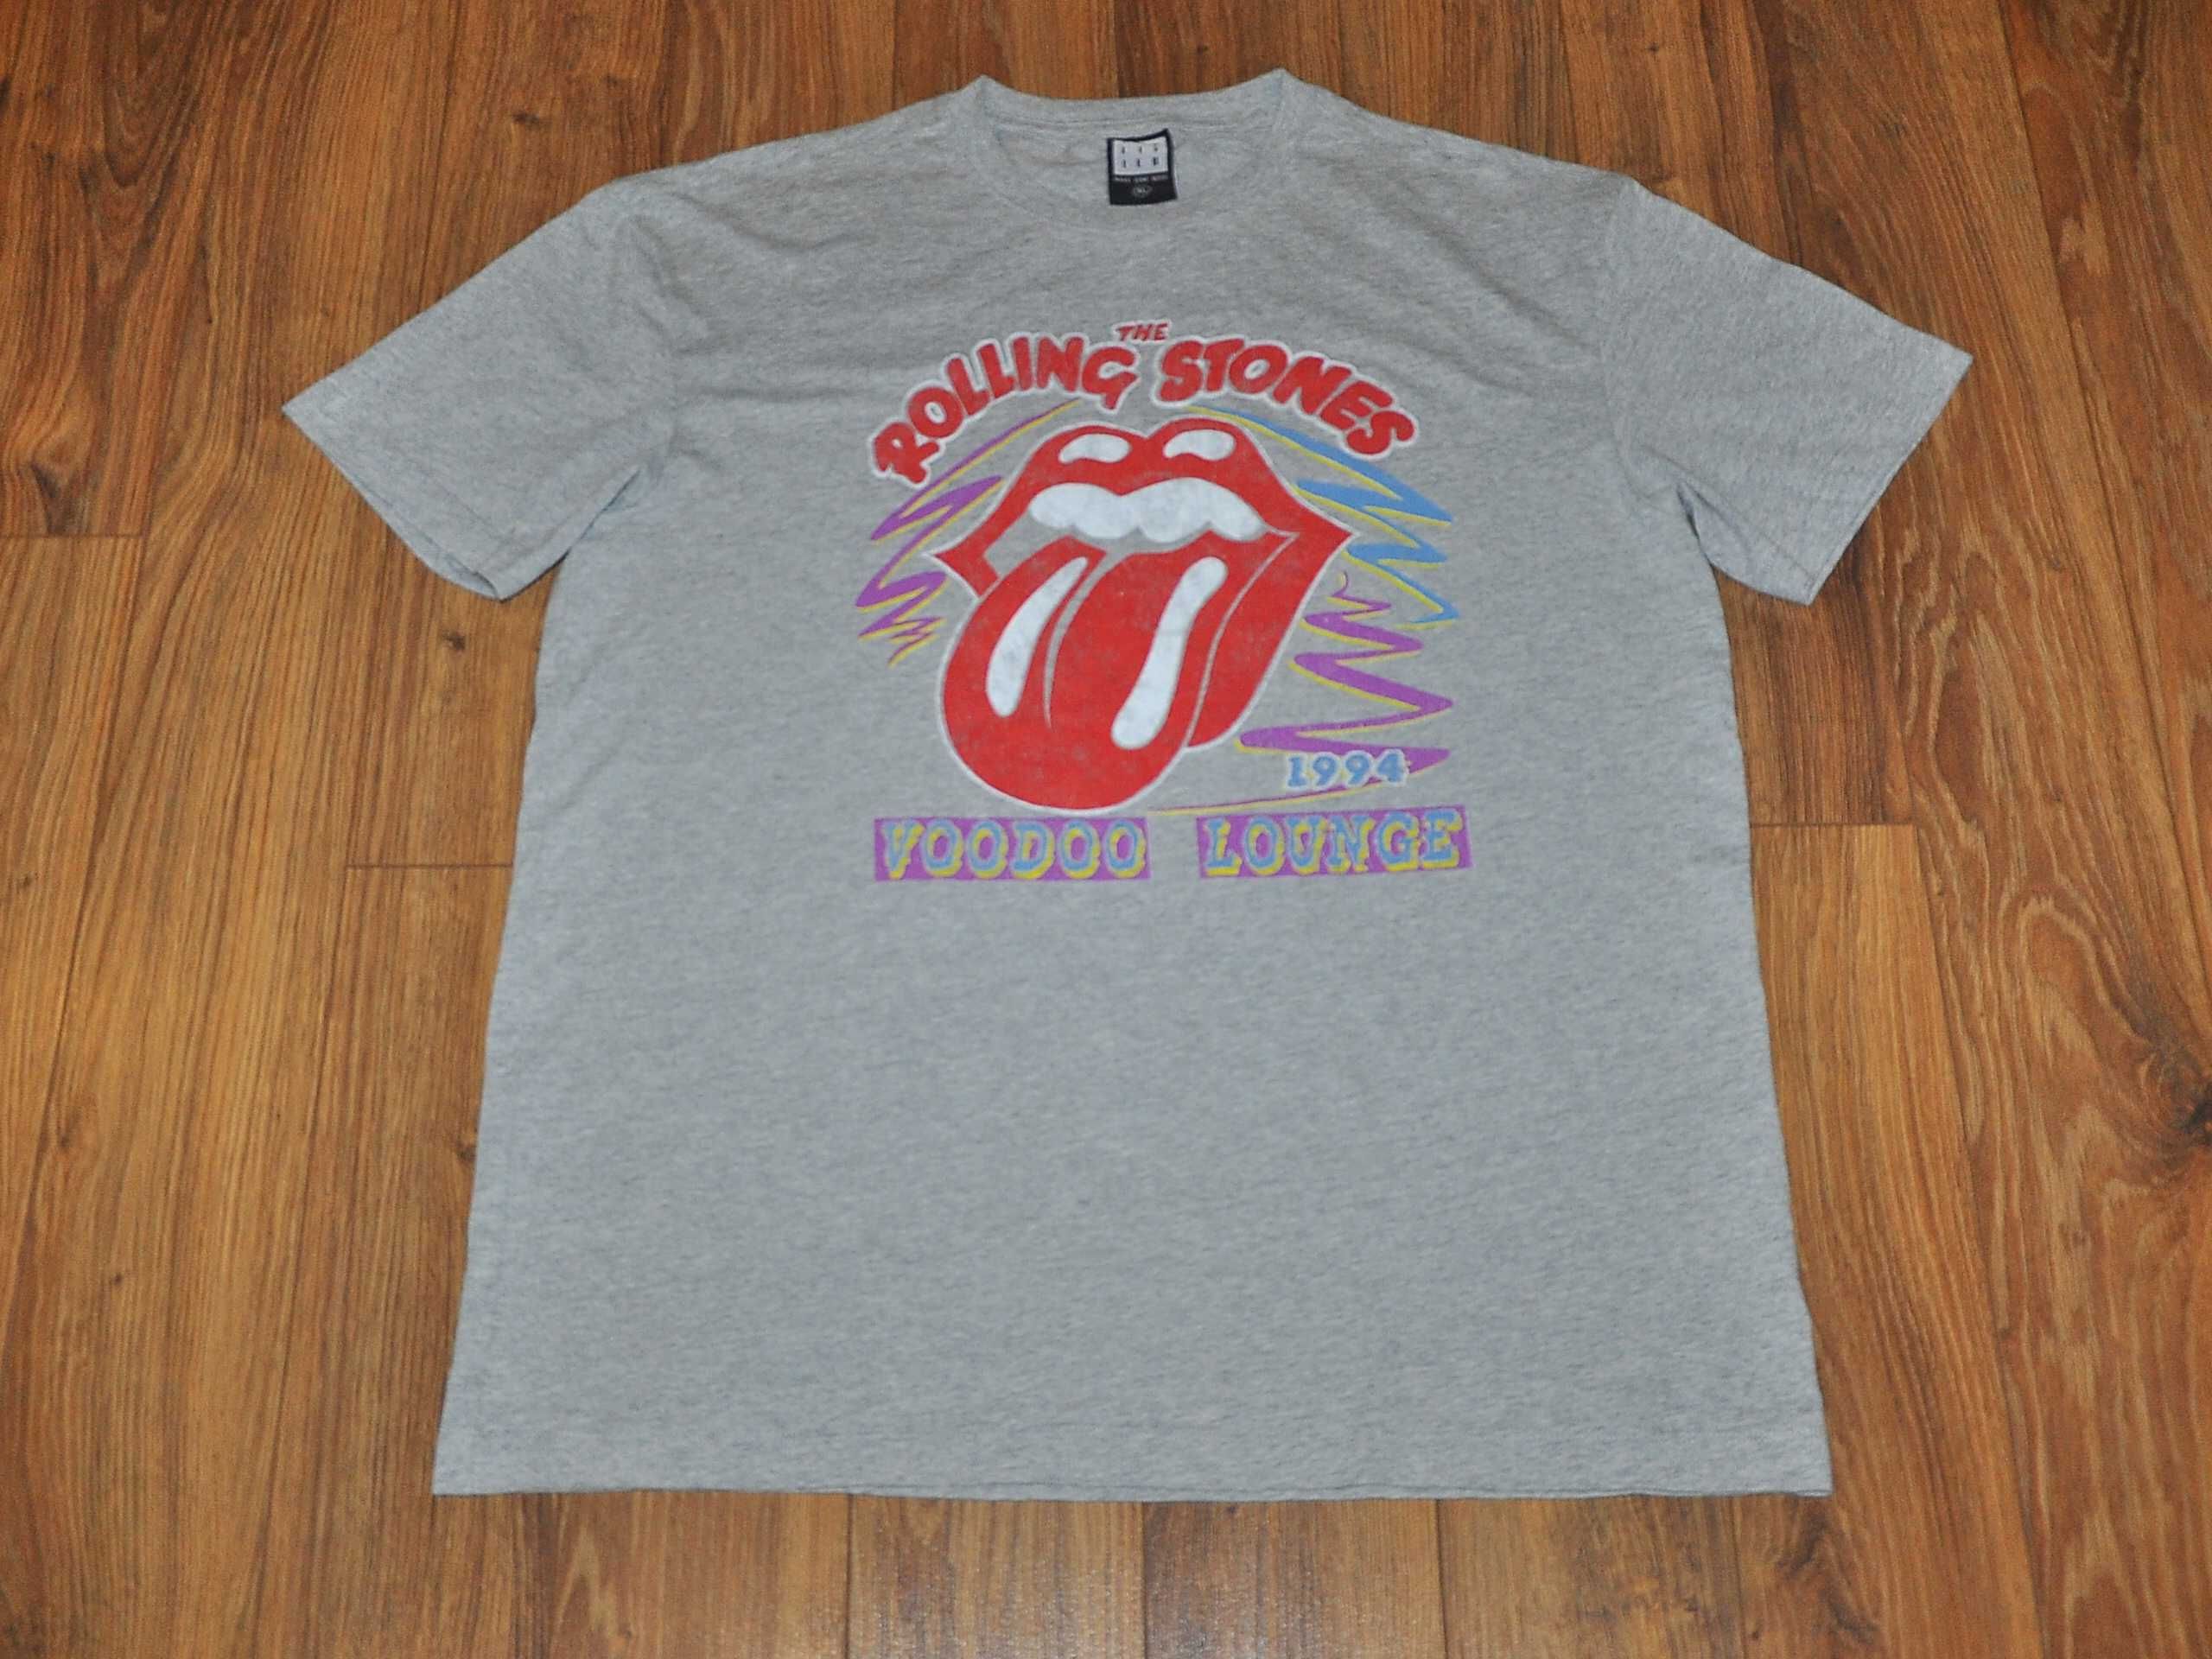 THE ROLLING STONES - Voodoo Lounge 1994 - koszulka rozm.XL Amplified